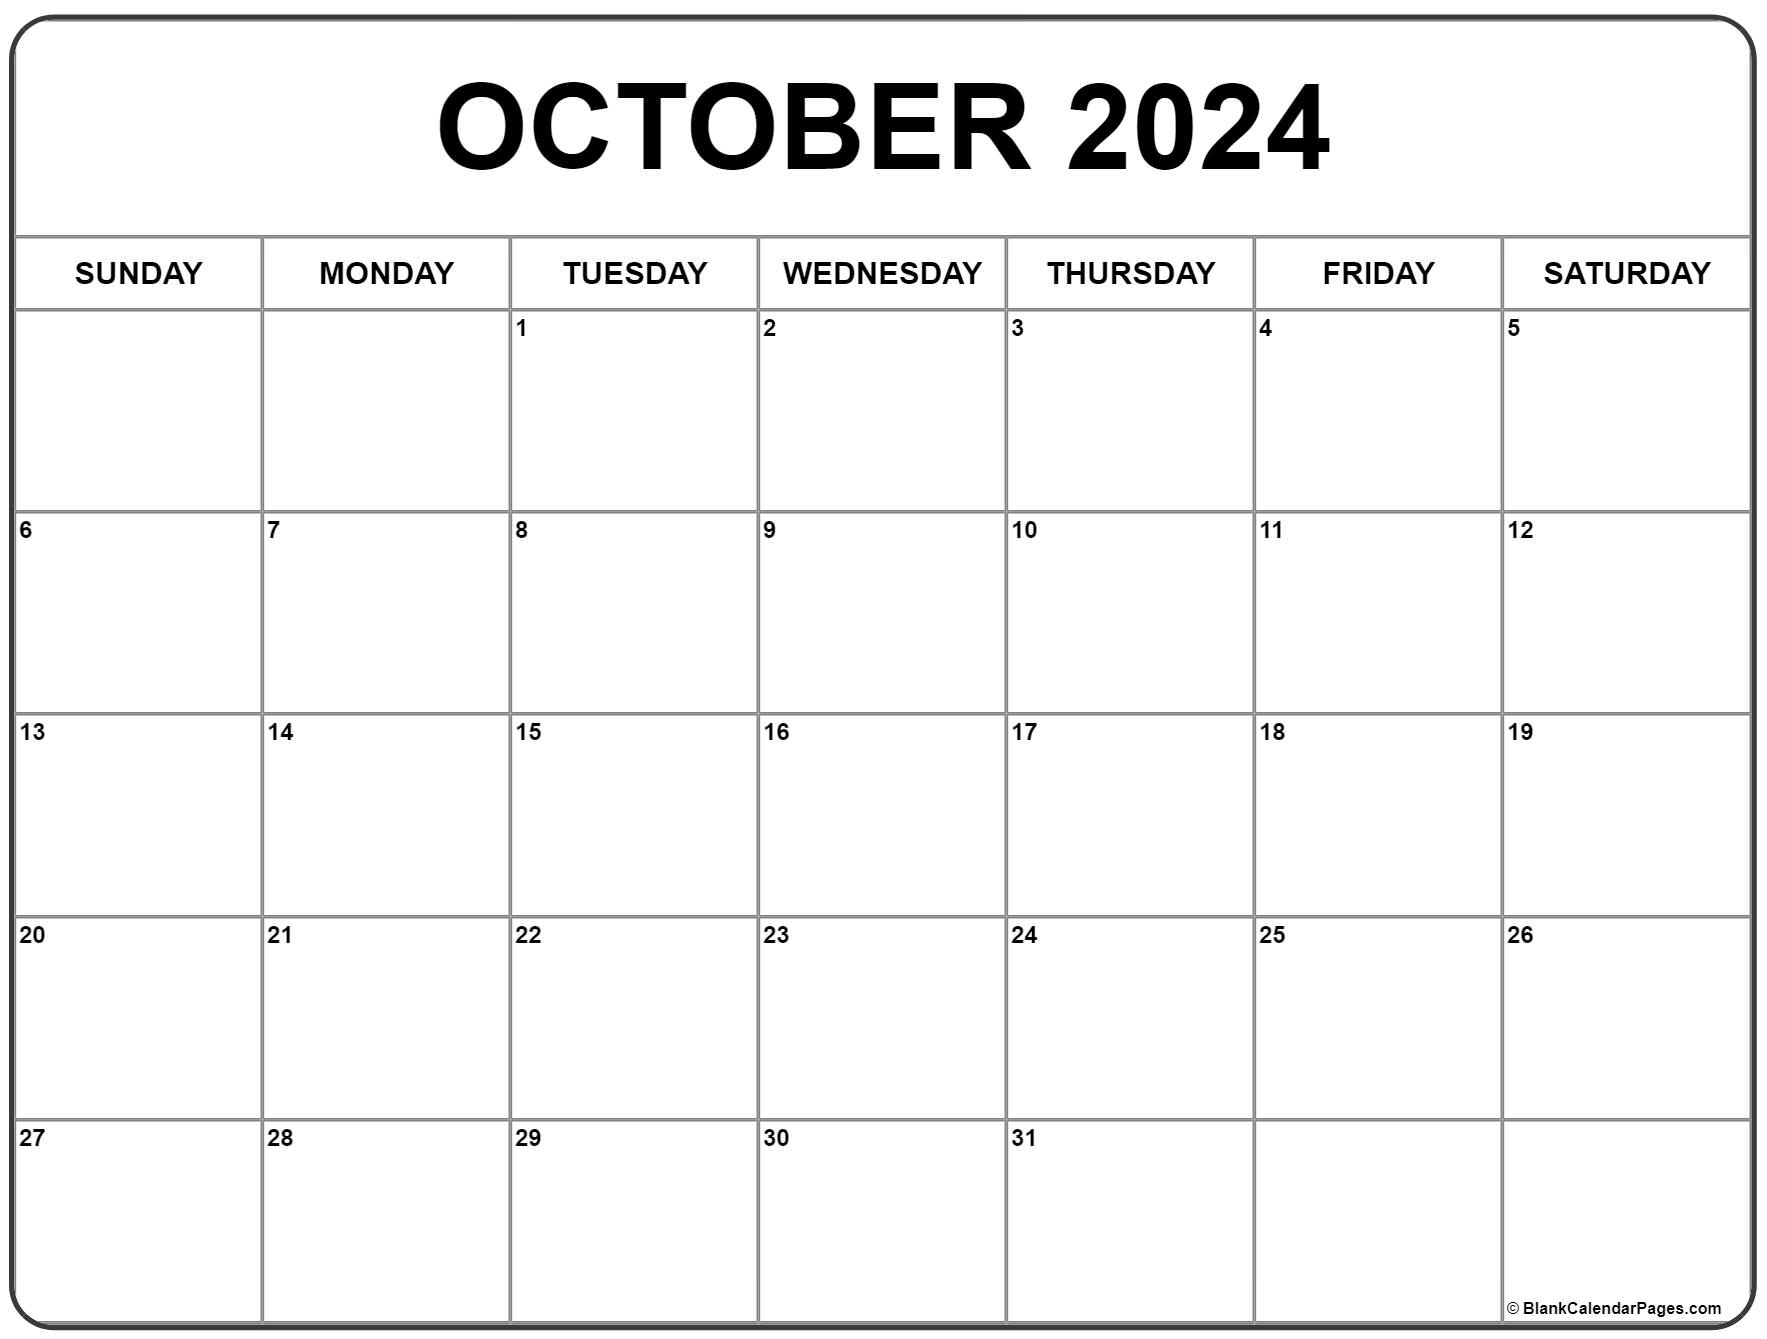 October 2024 Calendar | Free Printable Calendar for Oct 2024 Calendar Printable